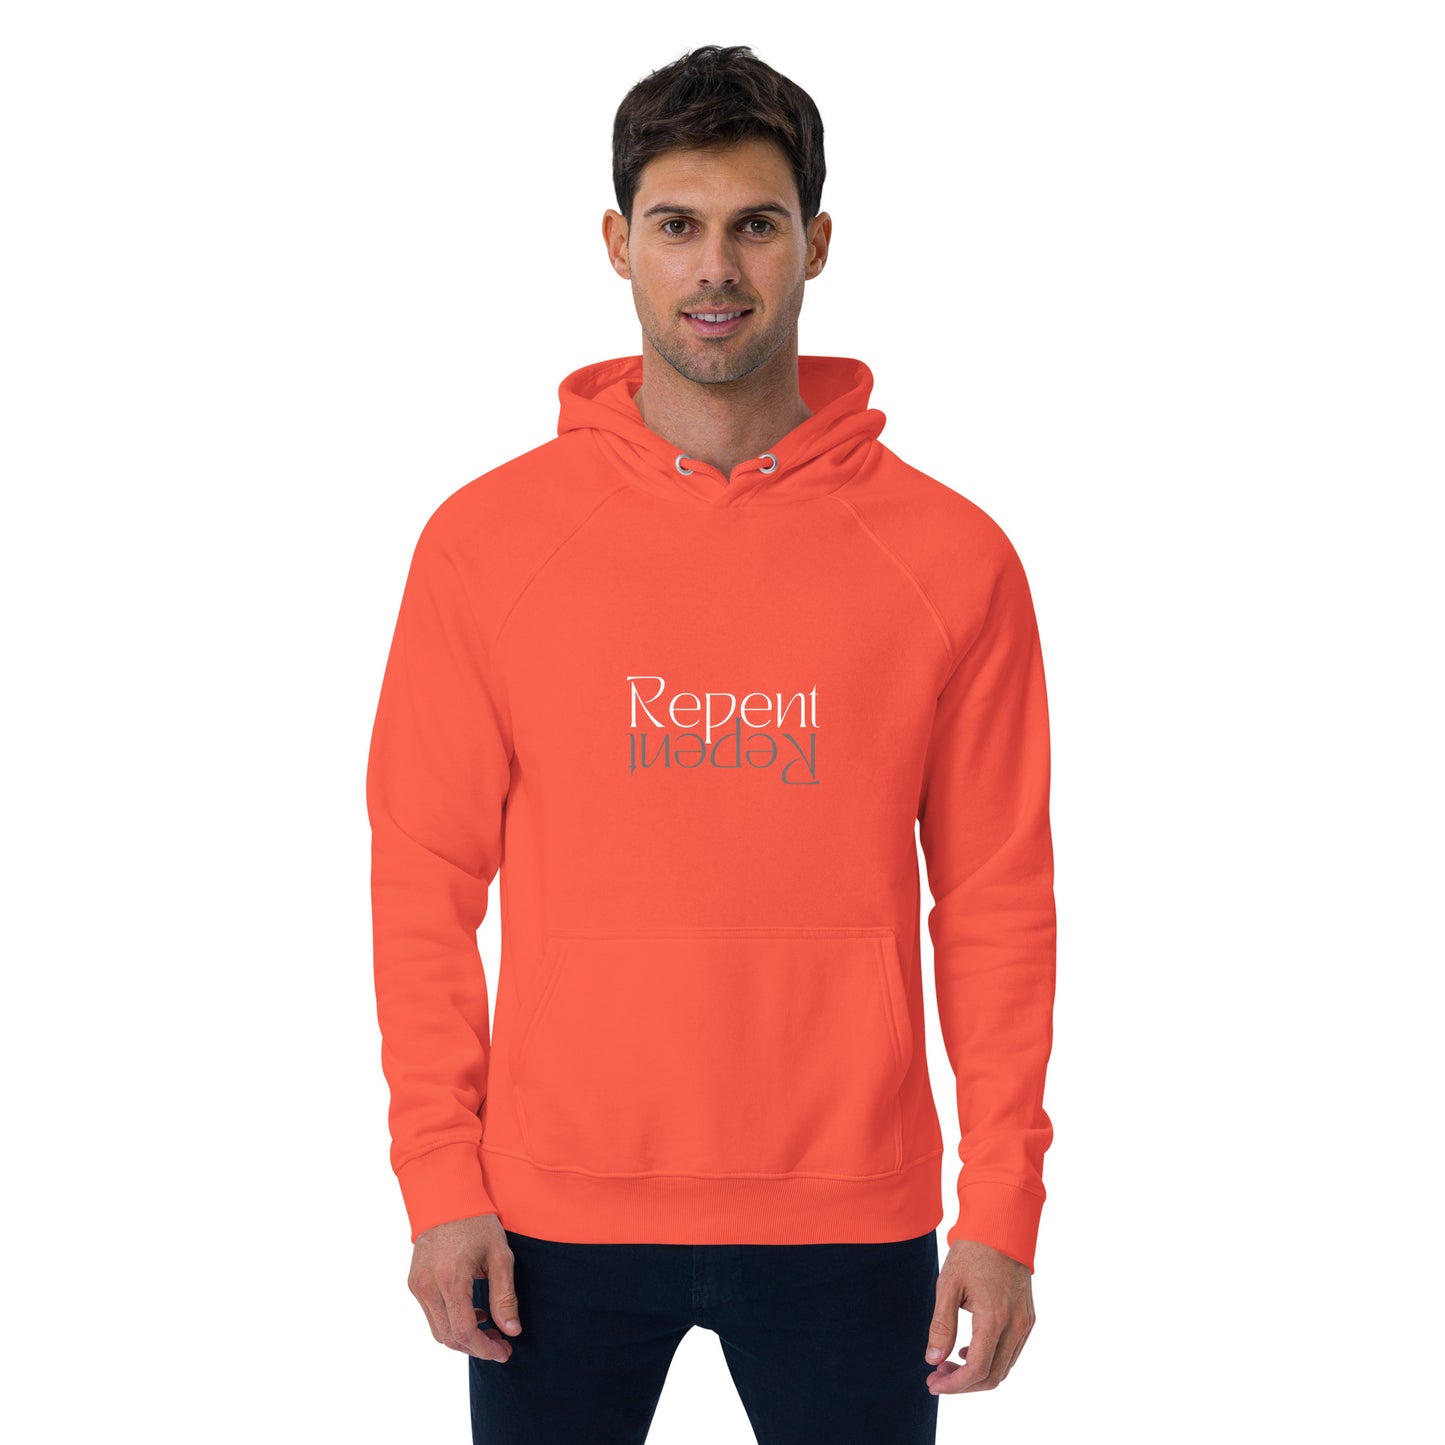 Repent Inverse Reflect eco raglan hoodie